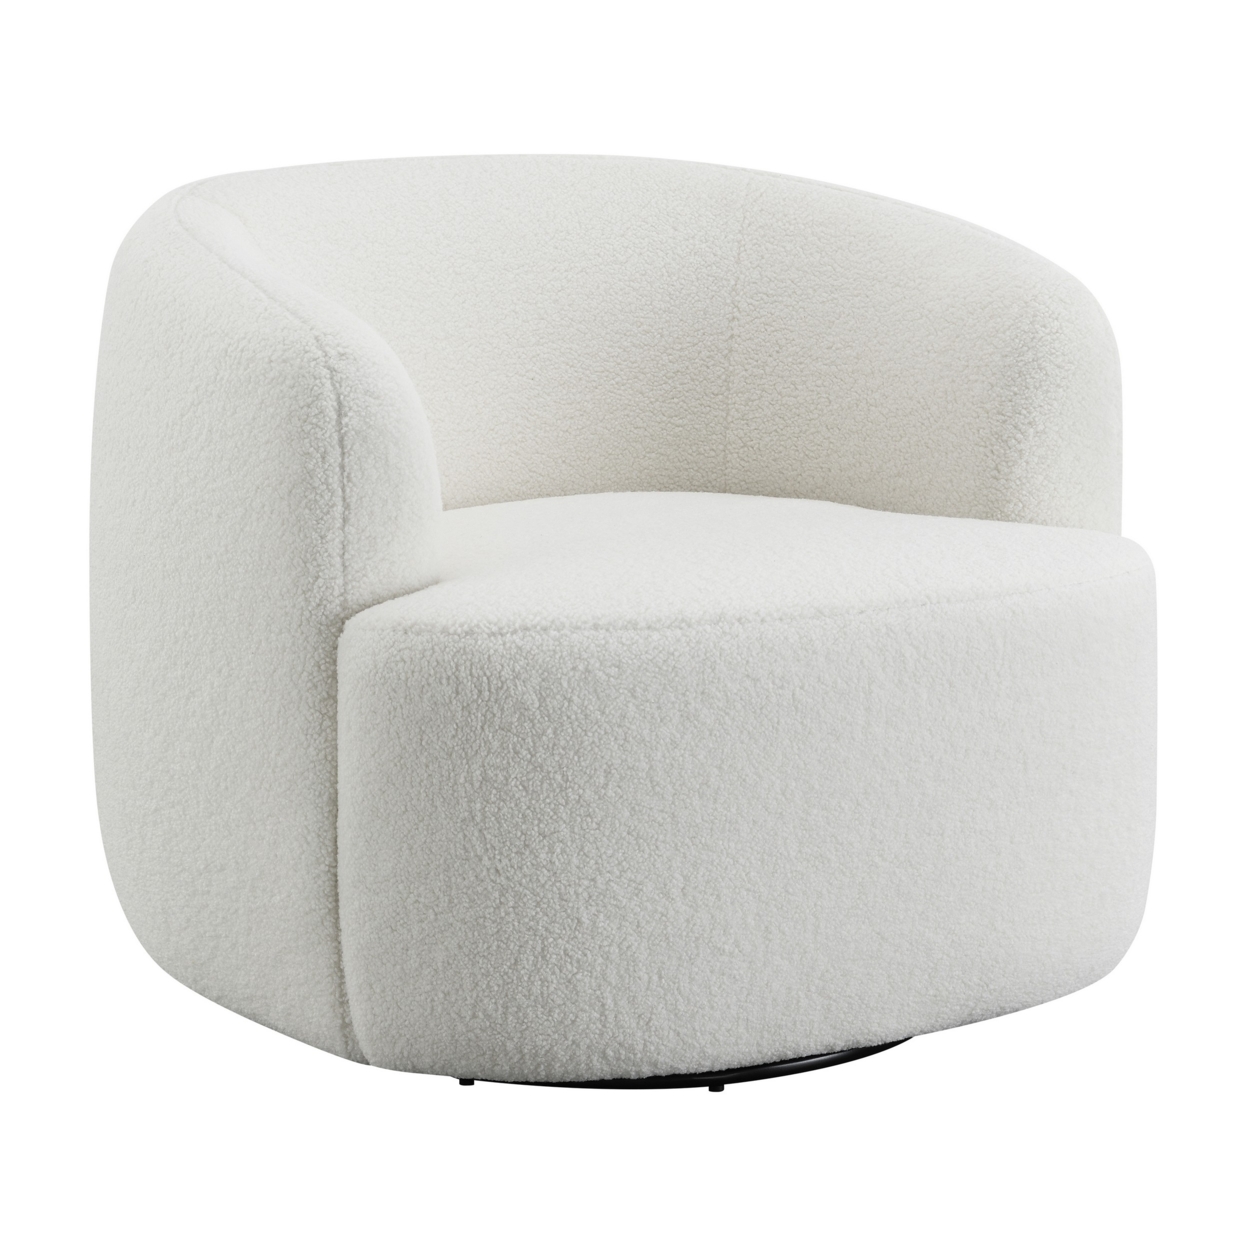 35 Inch Modern Swivel Accent Chair, Padded Seat, Round Barrel Back, White- Saltoro Sherpi